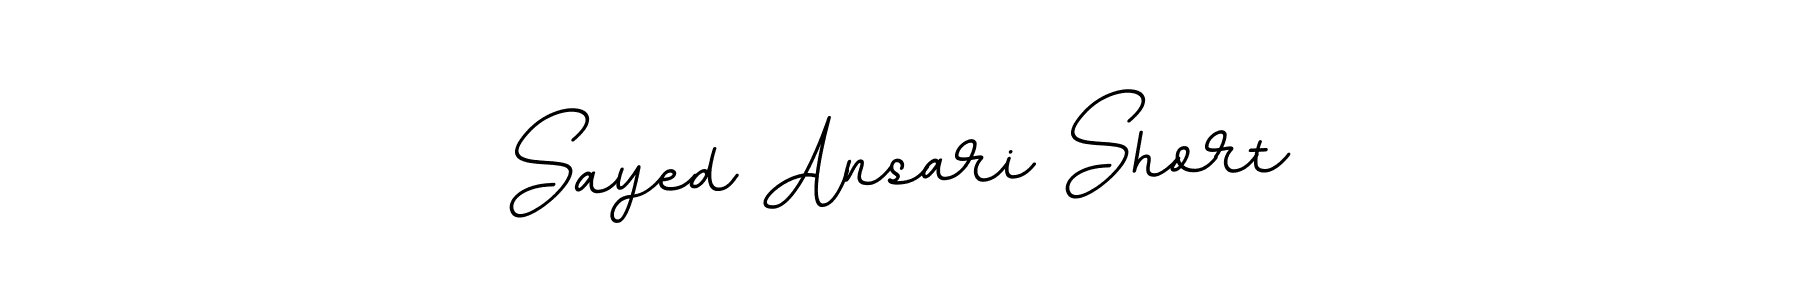 How to Draw Sayed Ansari Short signature style? BallpointsItalic-DORy9 is a latest design signature styles for name Sayed Ansari Short. Sayed Ansari Short signature style 11 images and pictures png